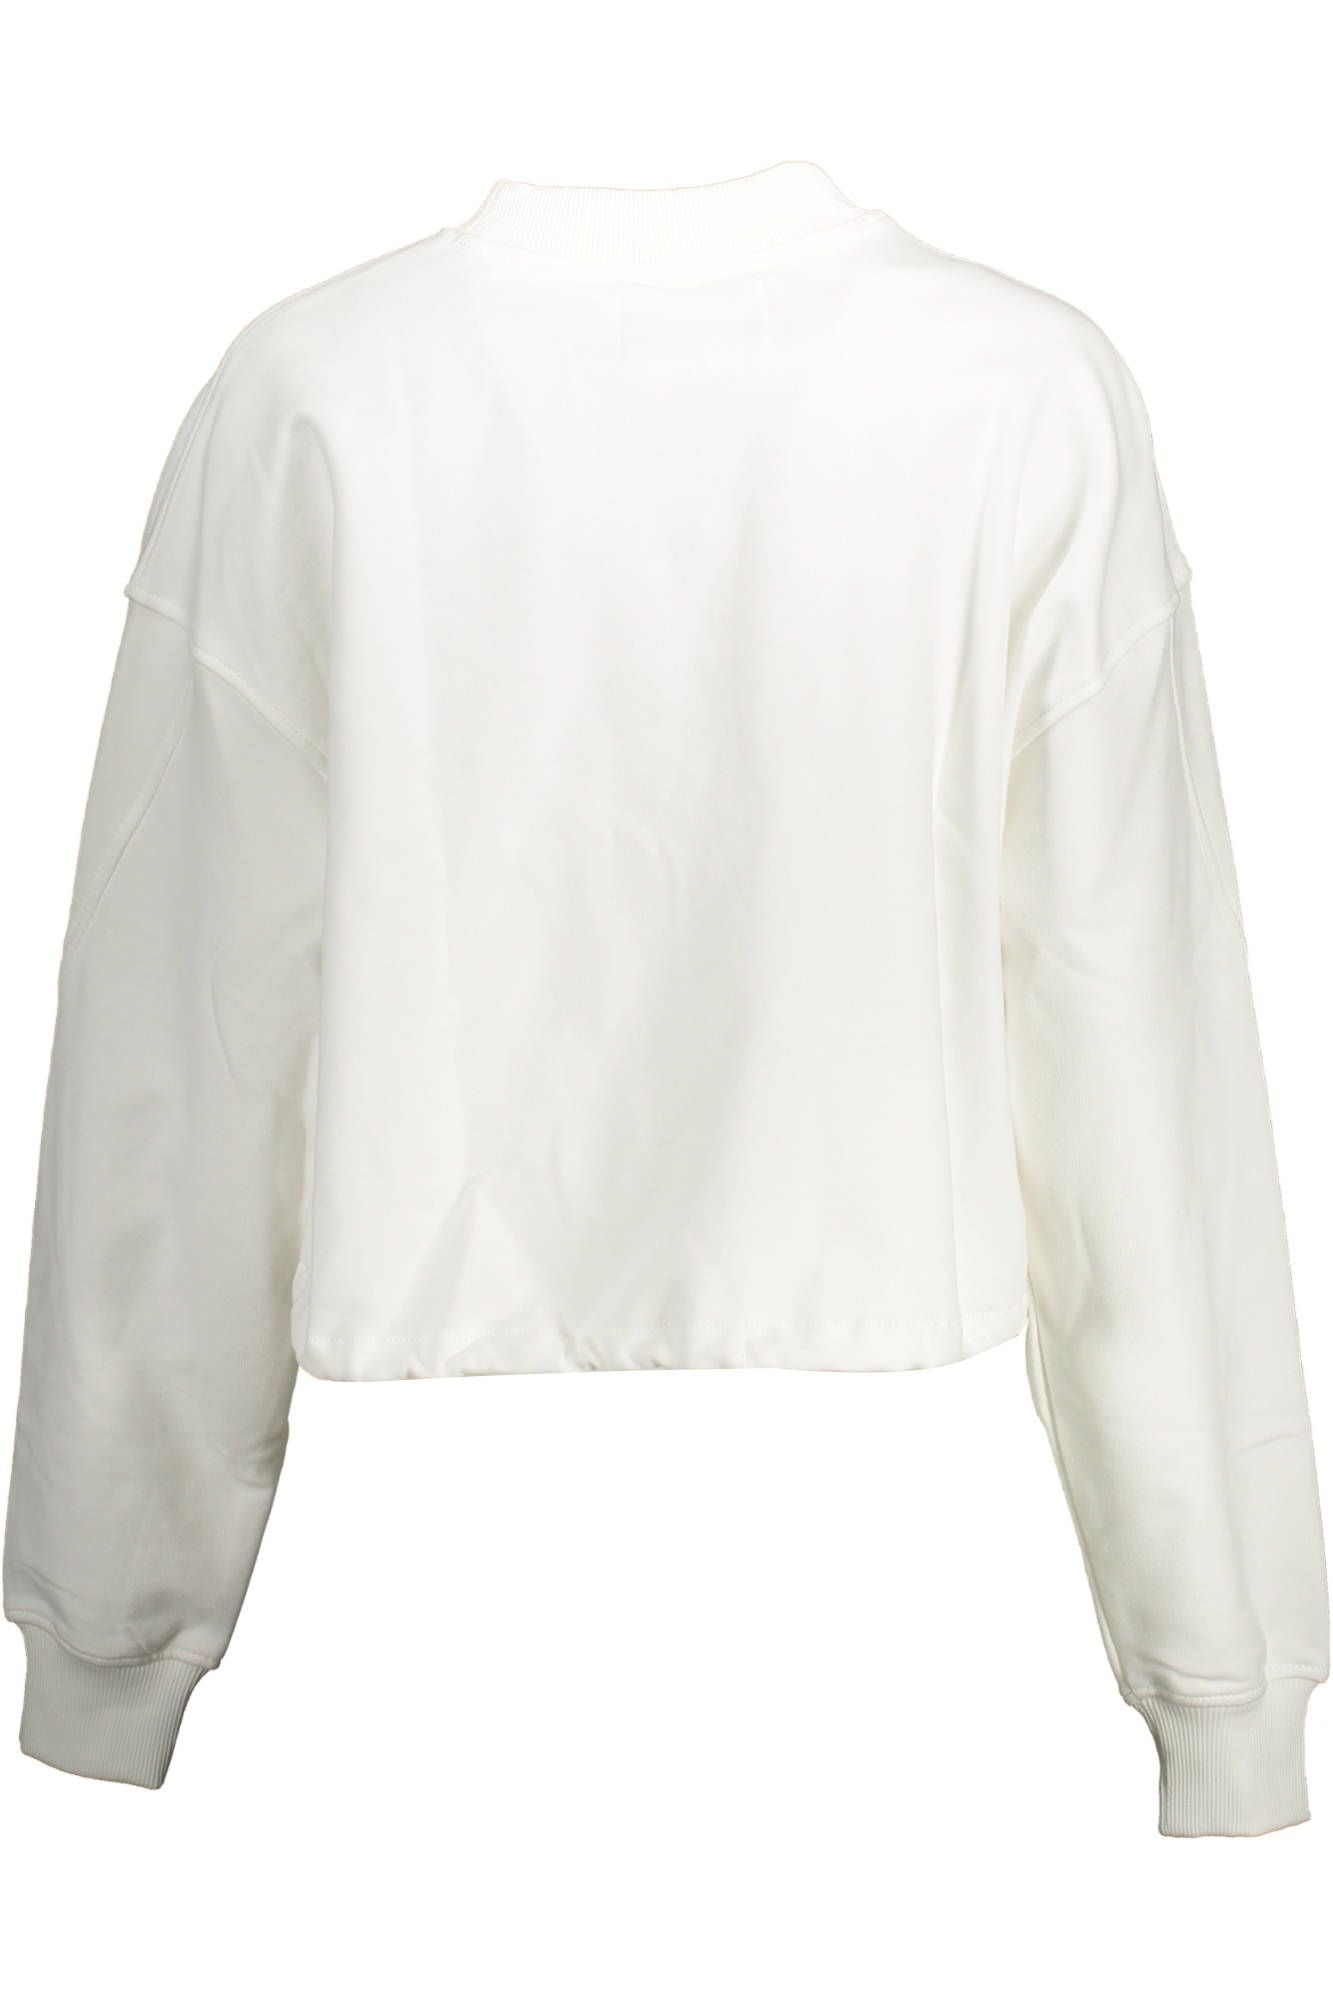 Calvin Klein Women's White Cotton Round Neck Sweater